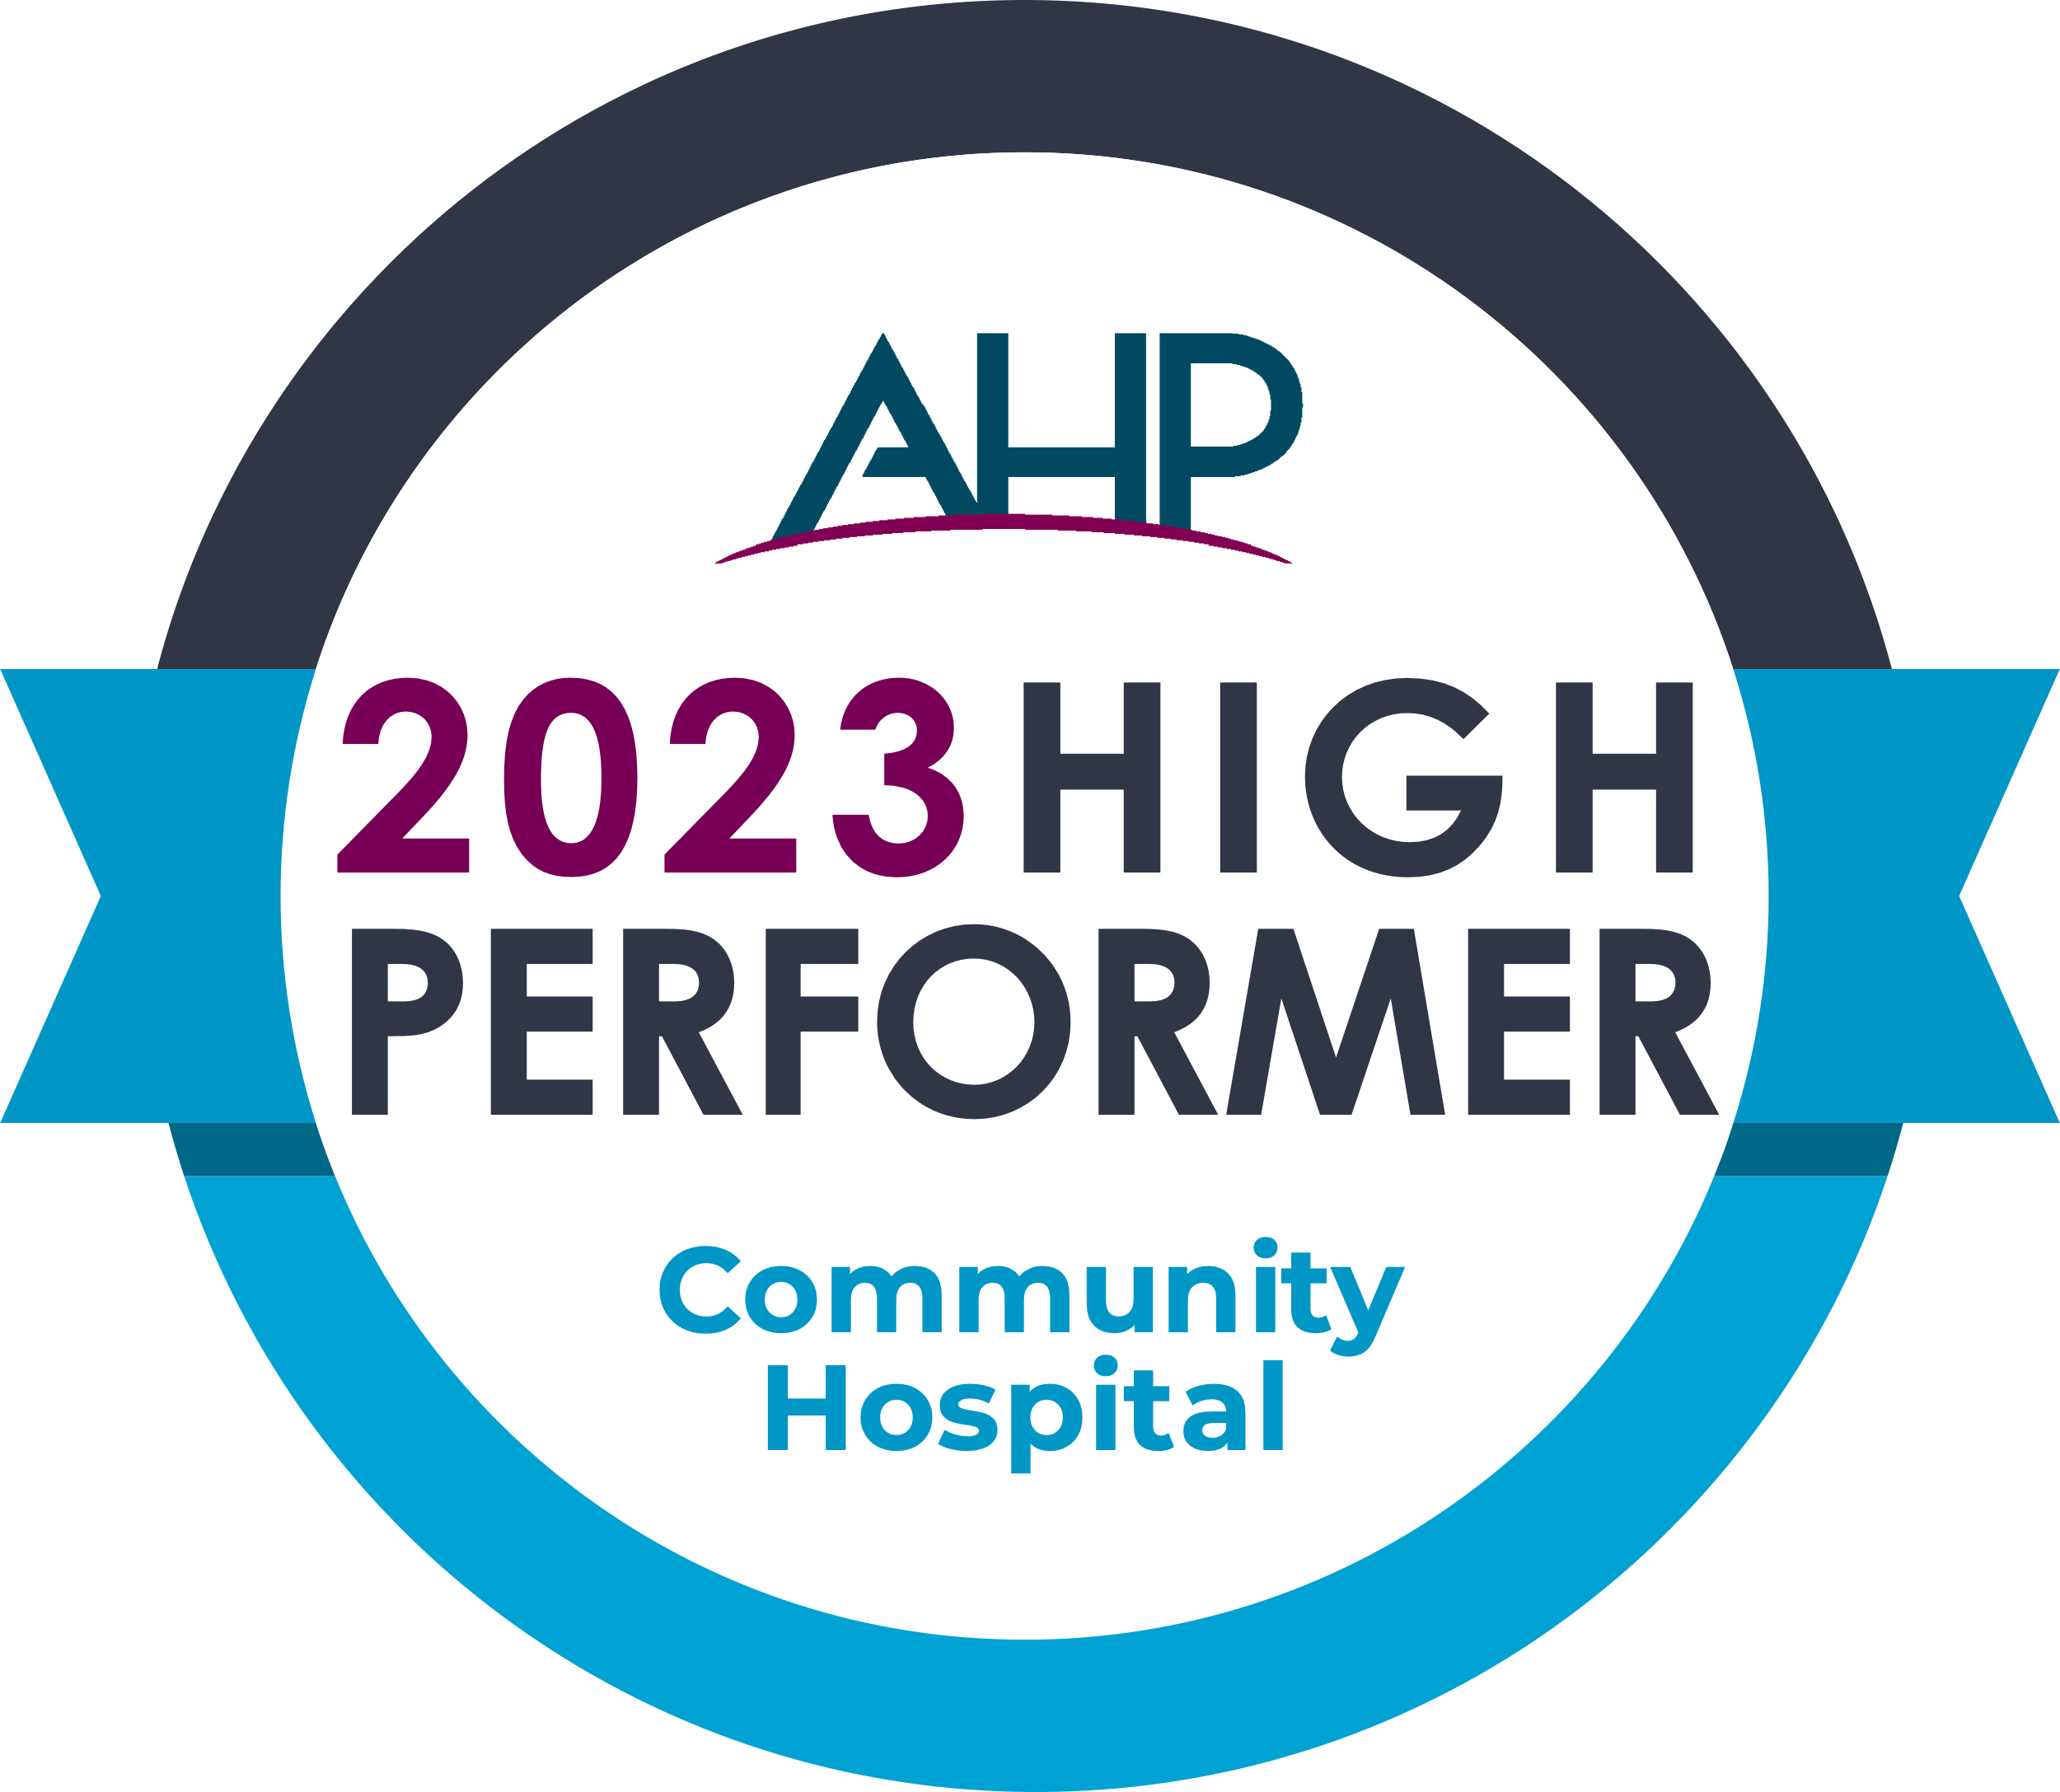 AHP High Performer 2023